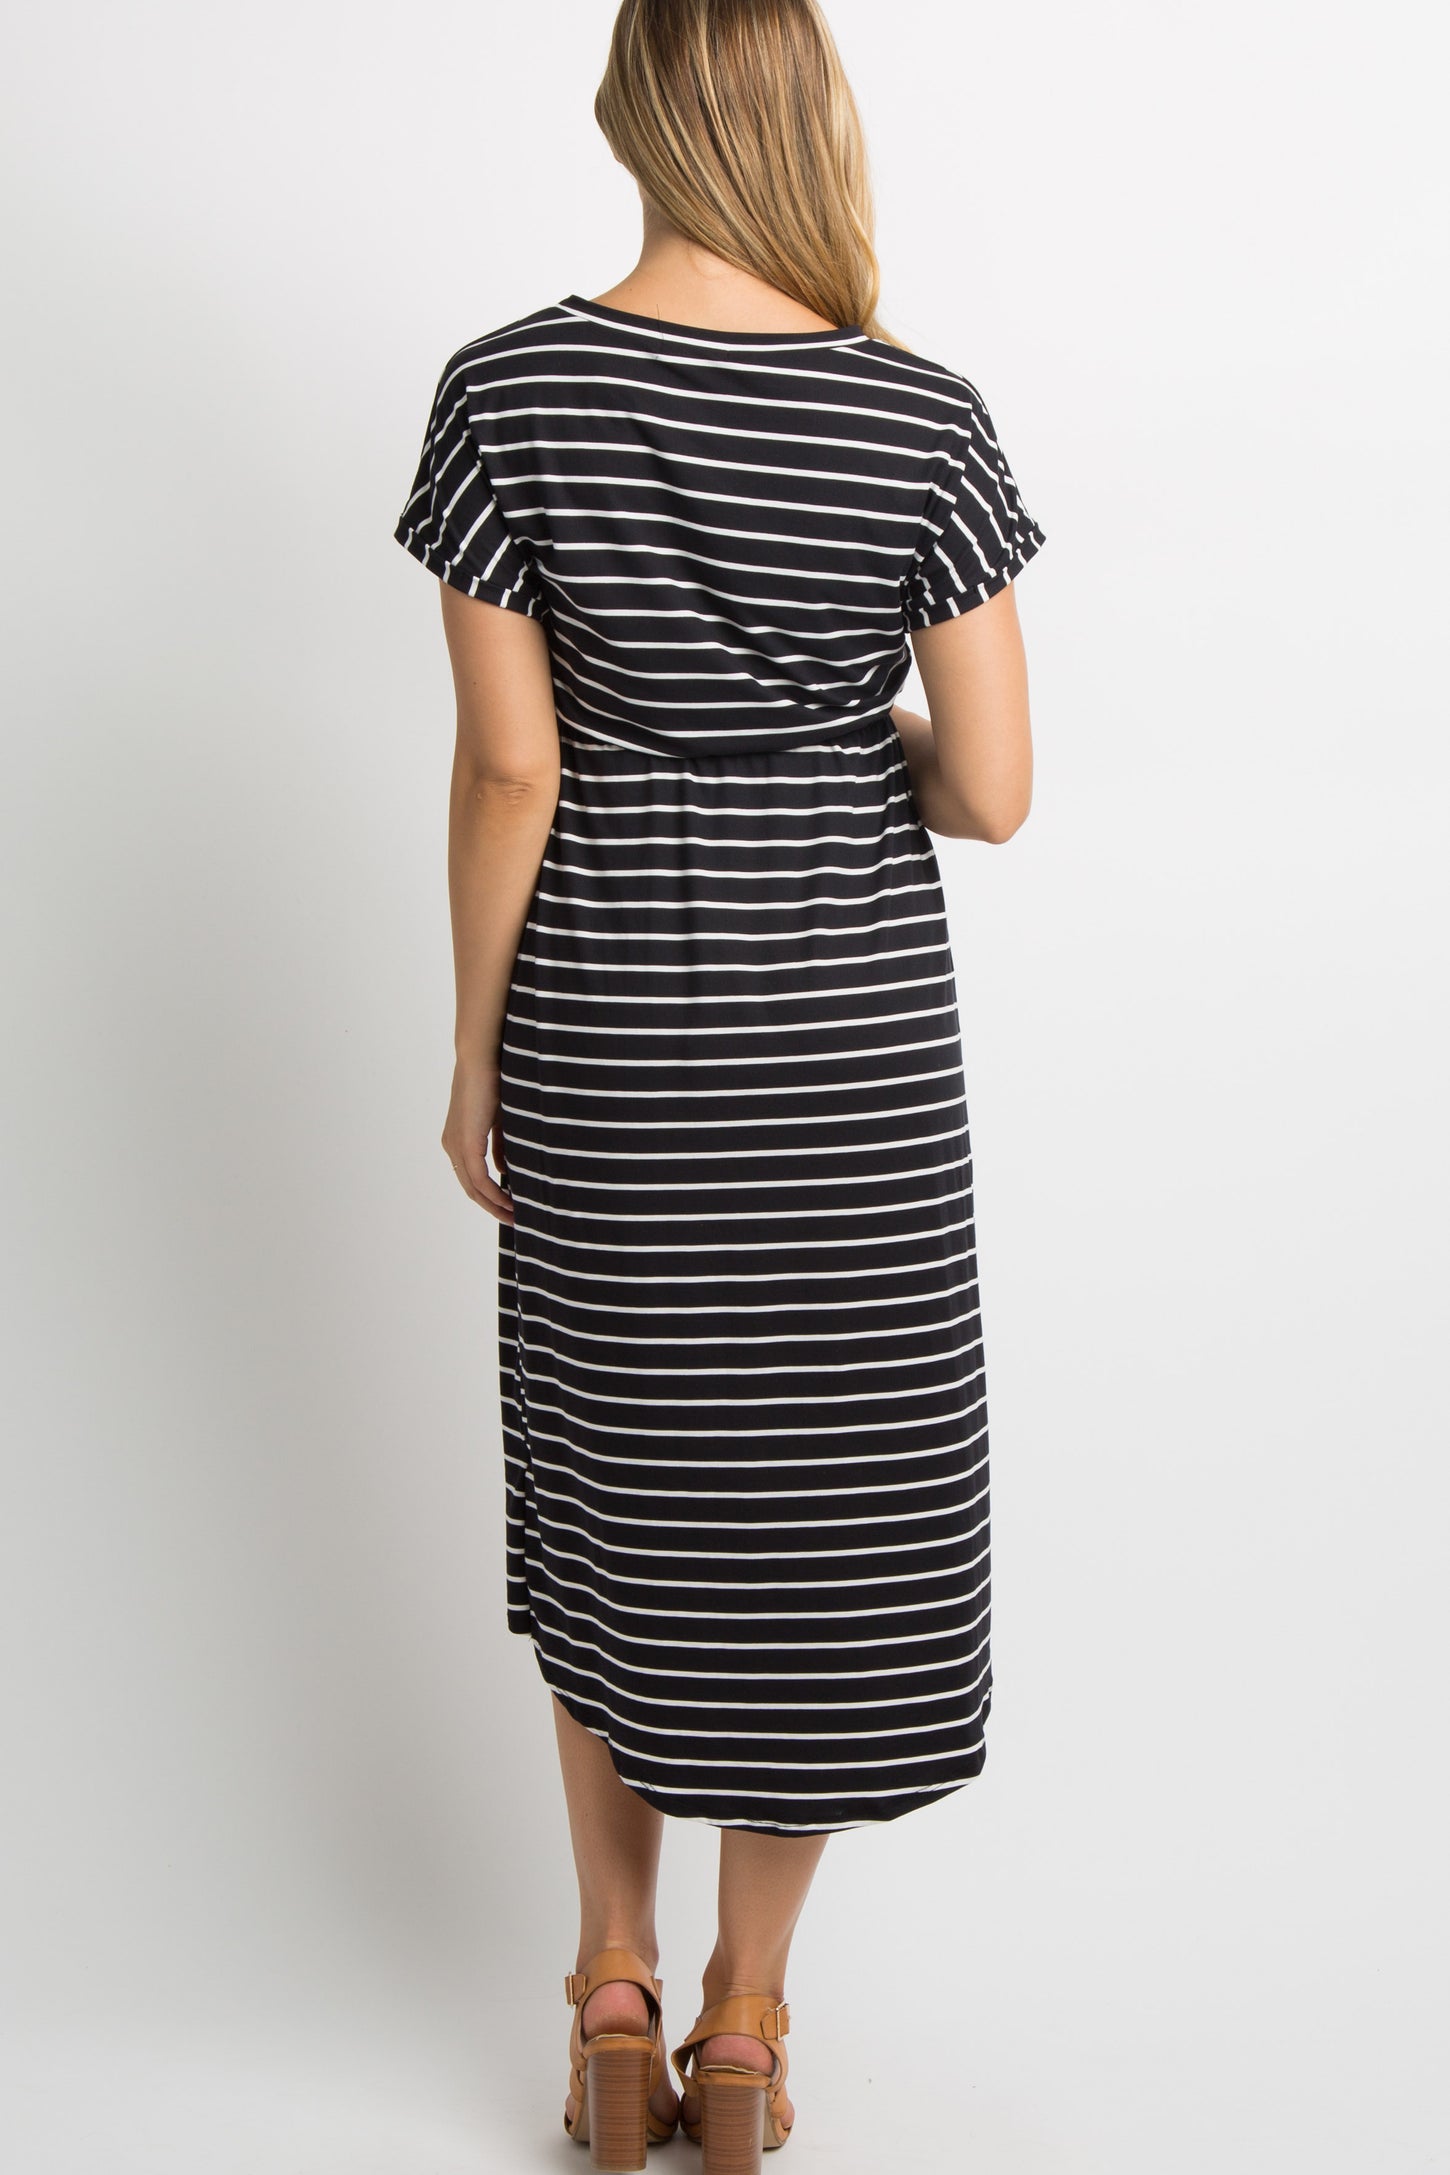 Black Striped Wrap Skirt Maternity Midi Dress